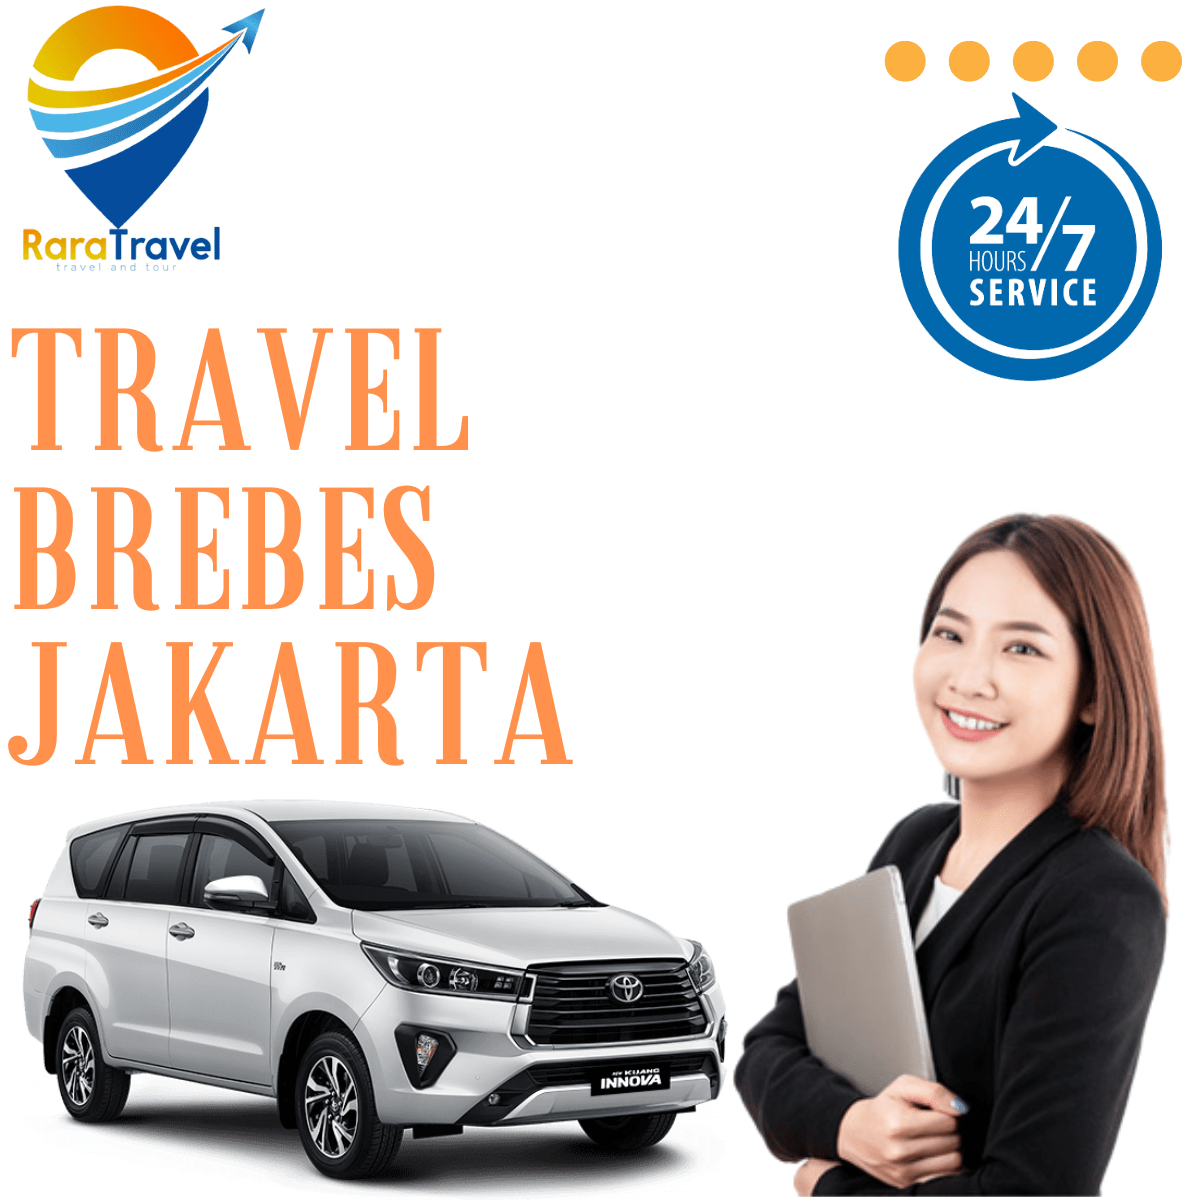 Travel Brebes Jakarta Hiace via Toll Murah 24 Jam